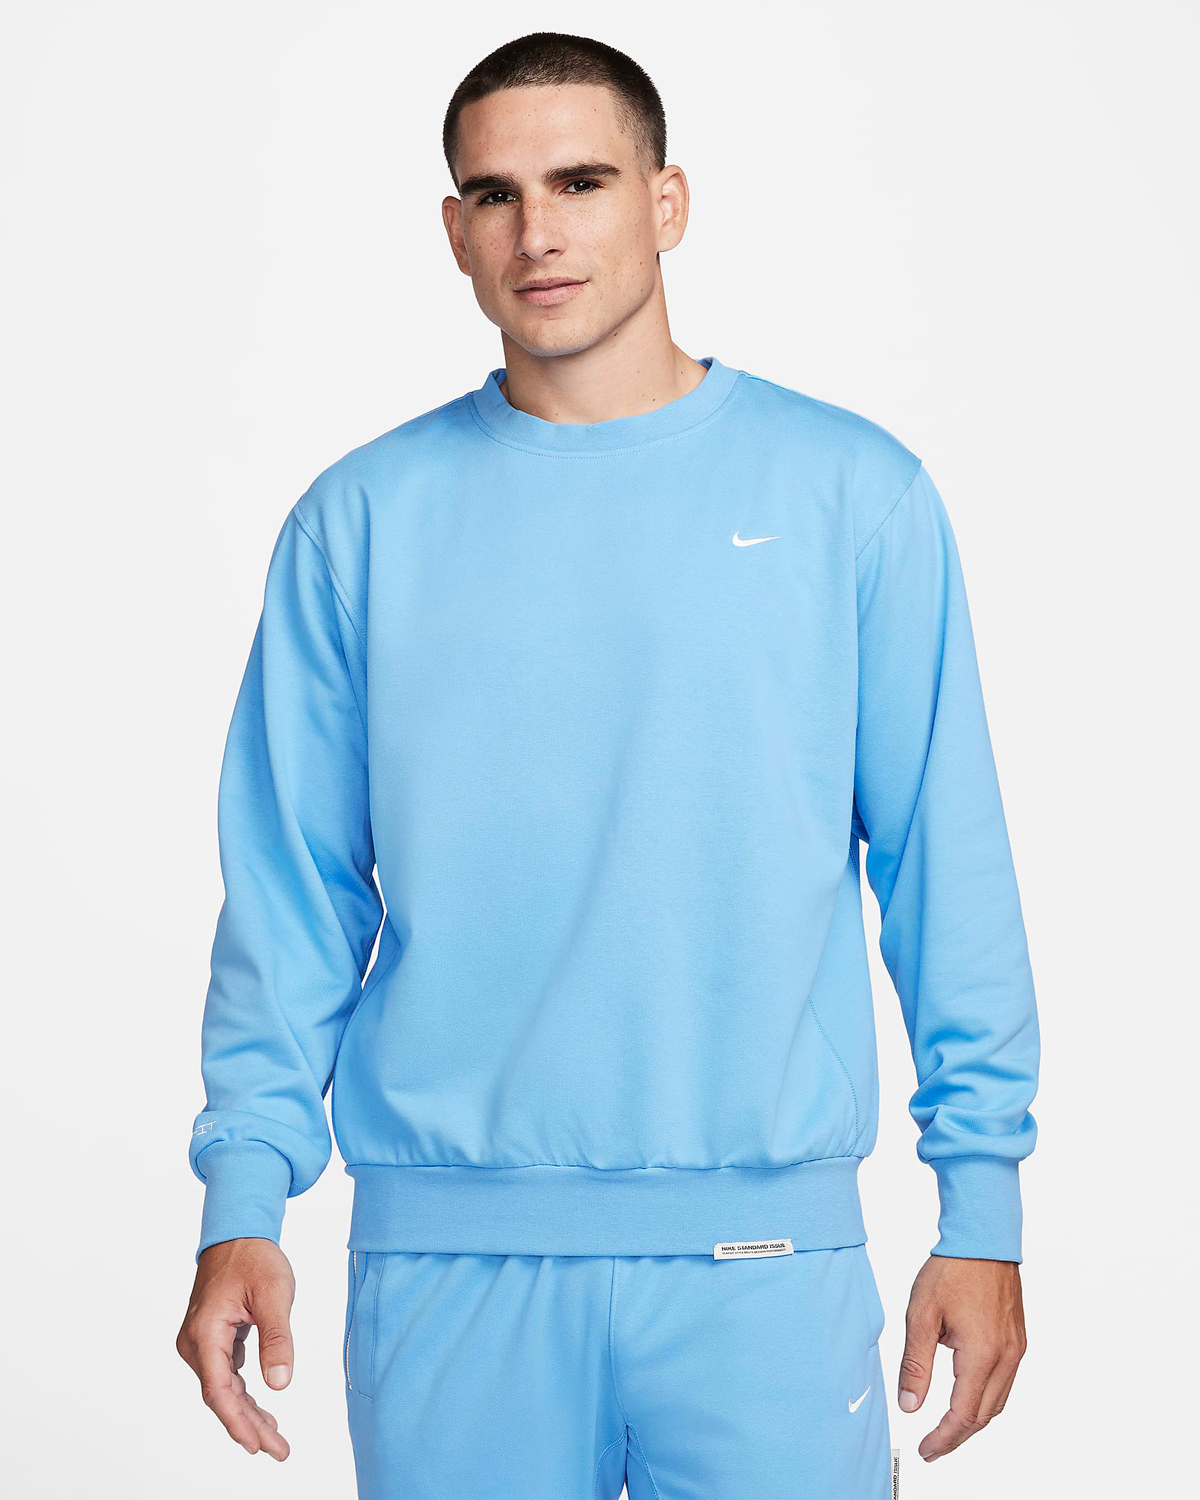 Nike-Standard-Issue-Sweatshirt-University-Blue